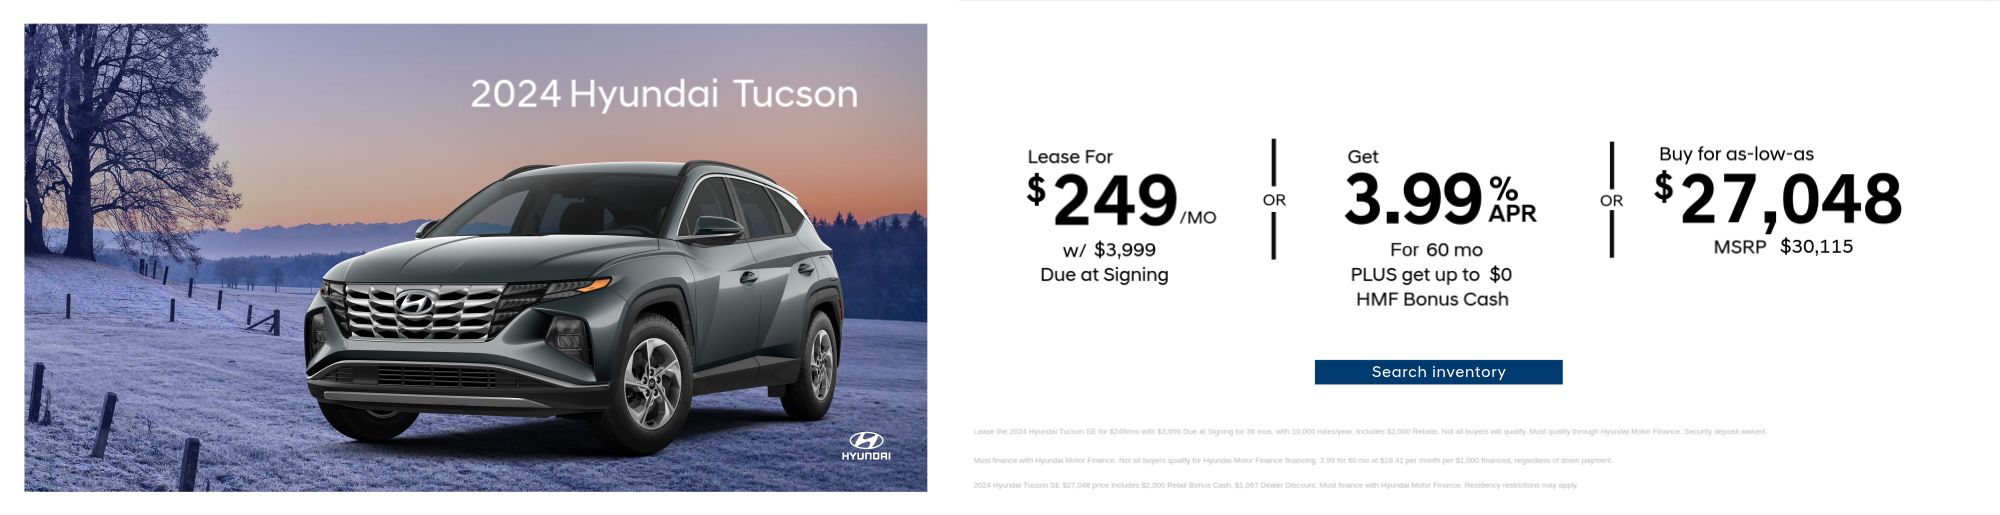 2023 Hyundai Tucson Special Offer